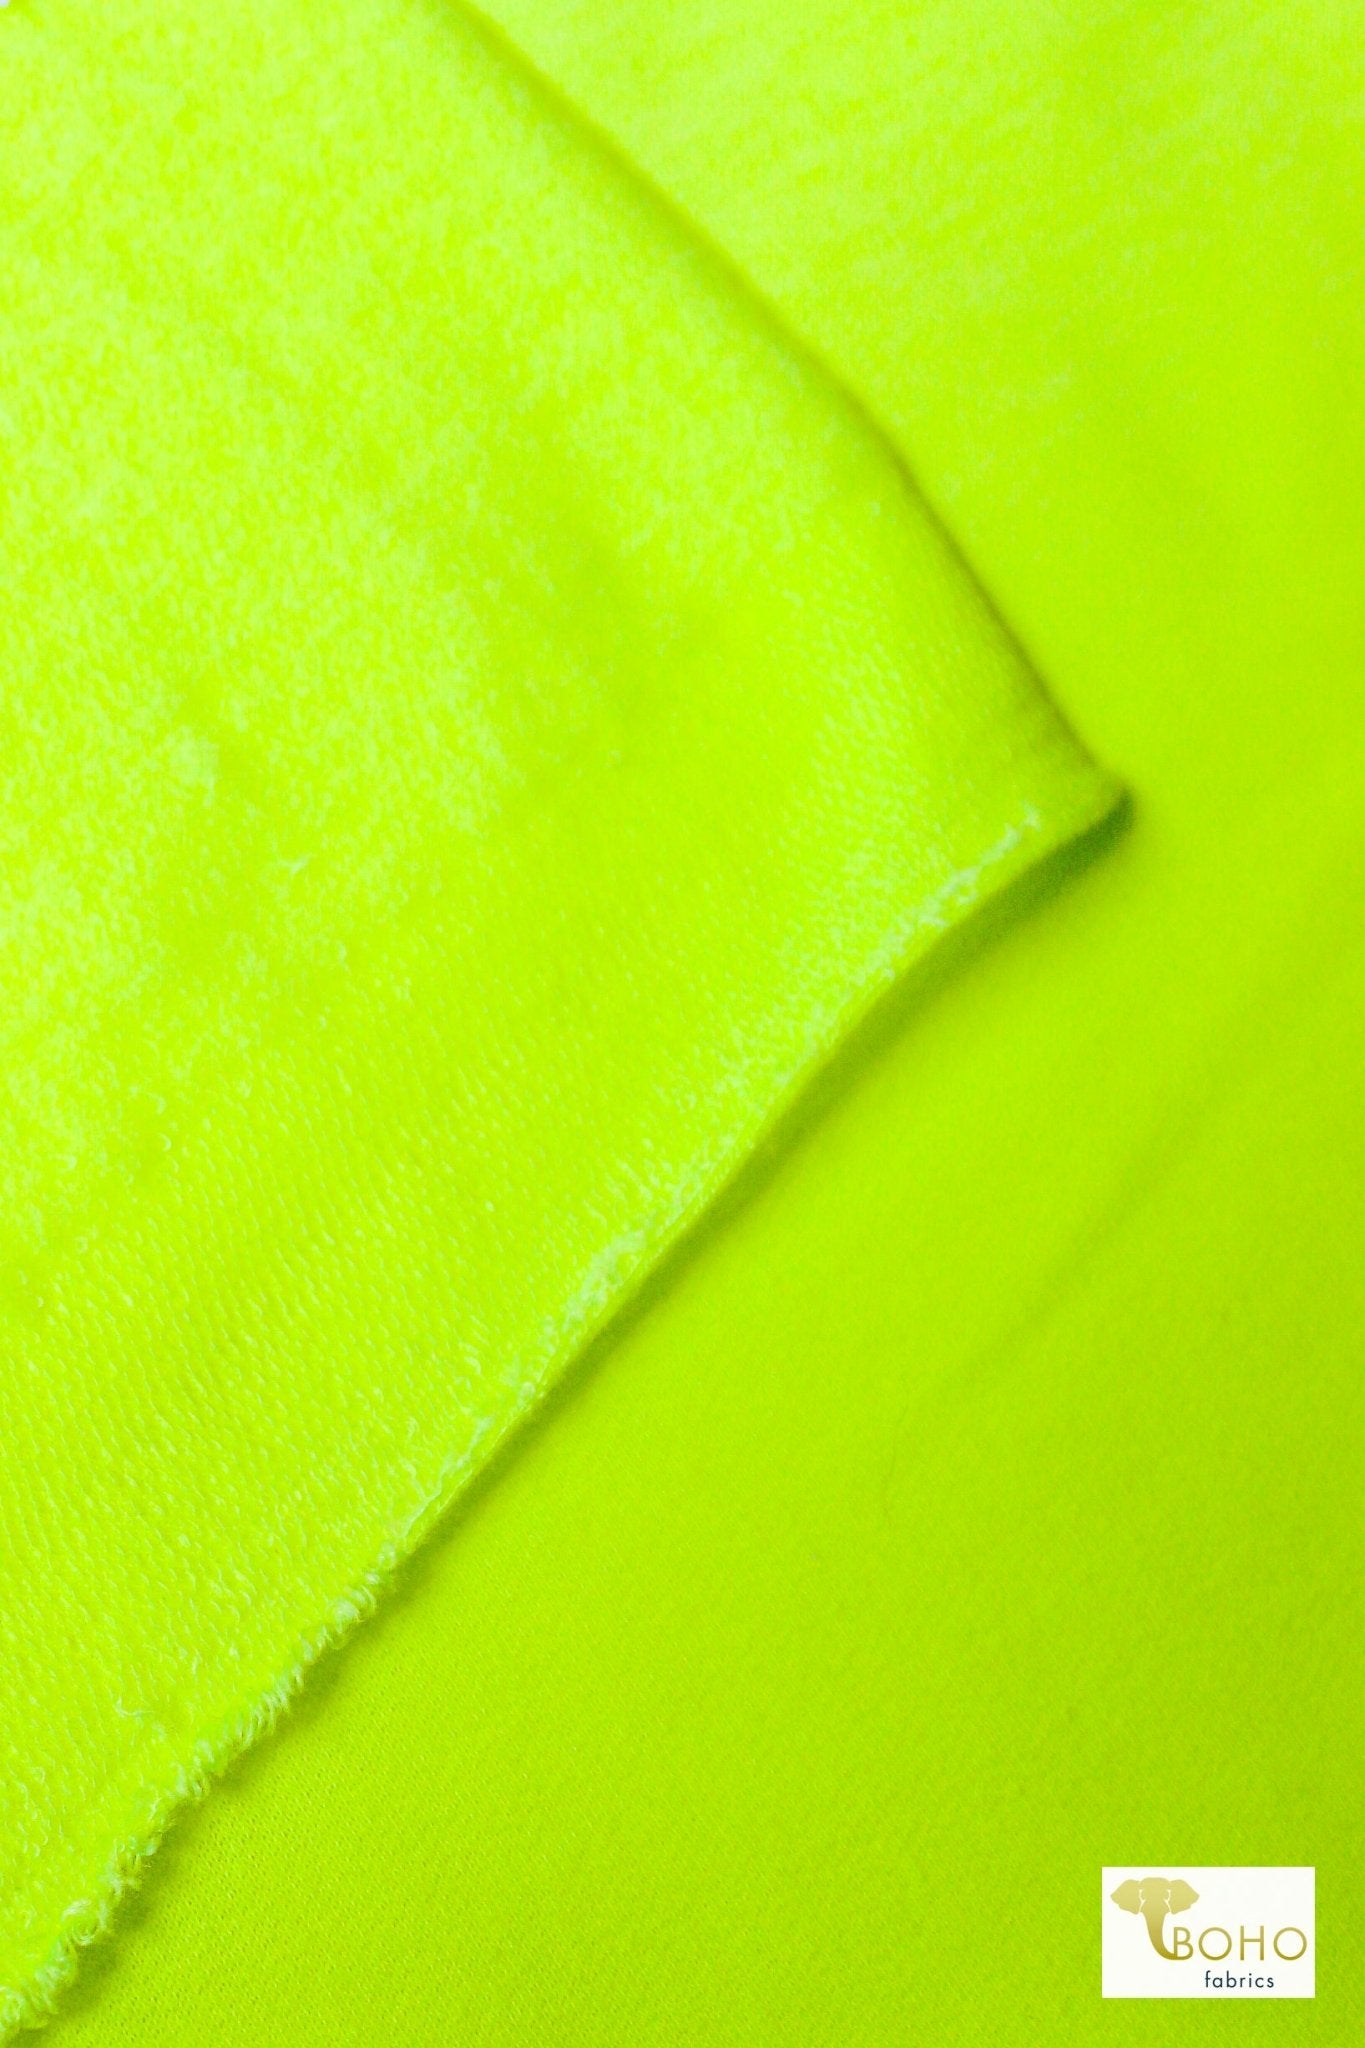 Neon Lime, Brushed French Terry Knit Fabric - Boho Fabrics